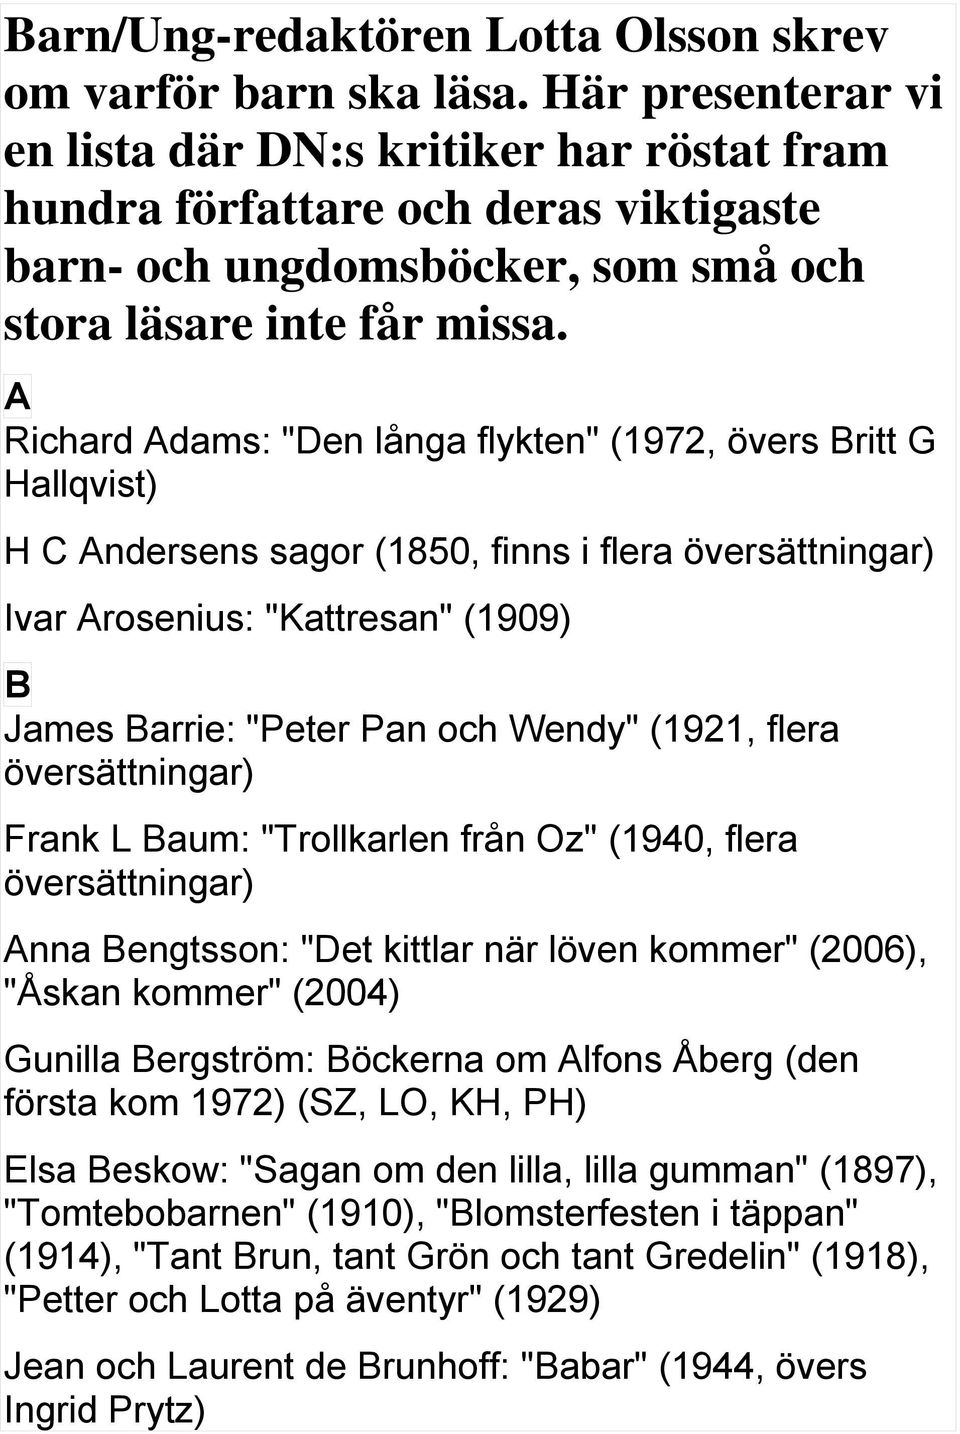 A Richard Adams: "Den långa flykten" (1972, övers Britt G Hallqvist) H C Andersens sagor (1850, finns i flera Ivar Arosenius: "Kattresan" (1909) B James Barrie: "Peter Pan och Wendy" (1921, flera